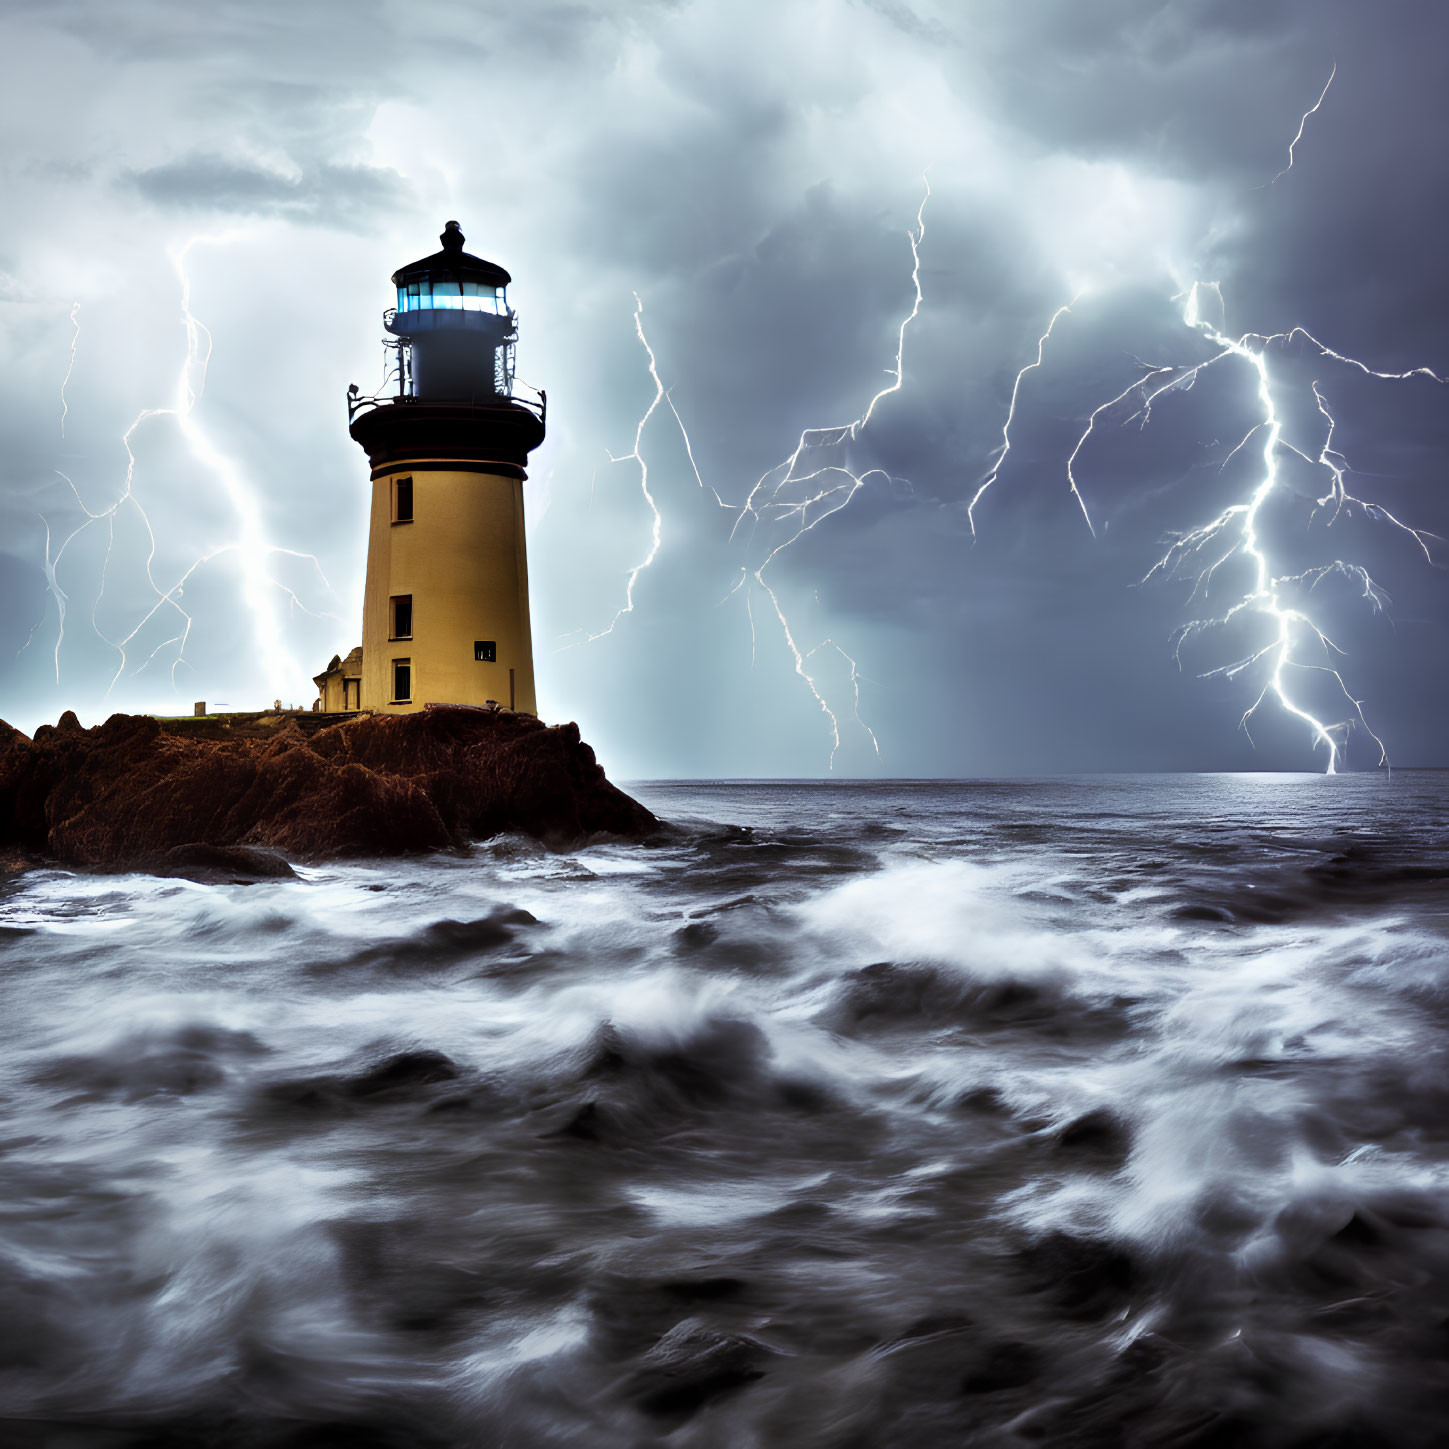 Stormy Sky and Lightning Strikes at Rugged Coastline